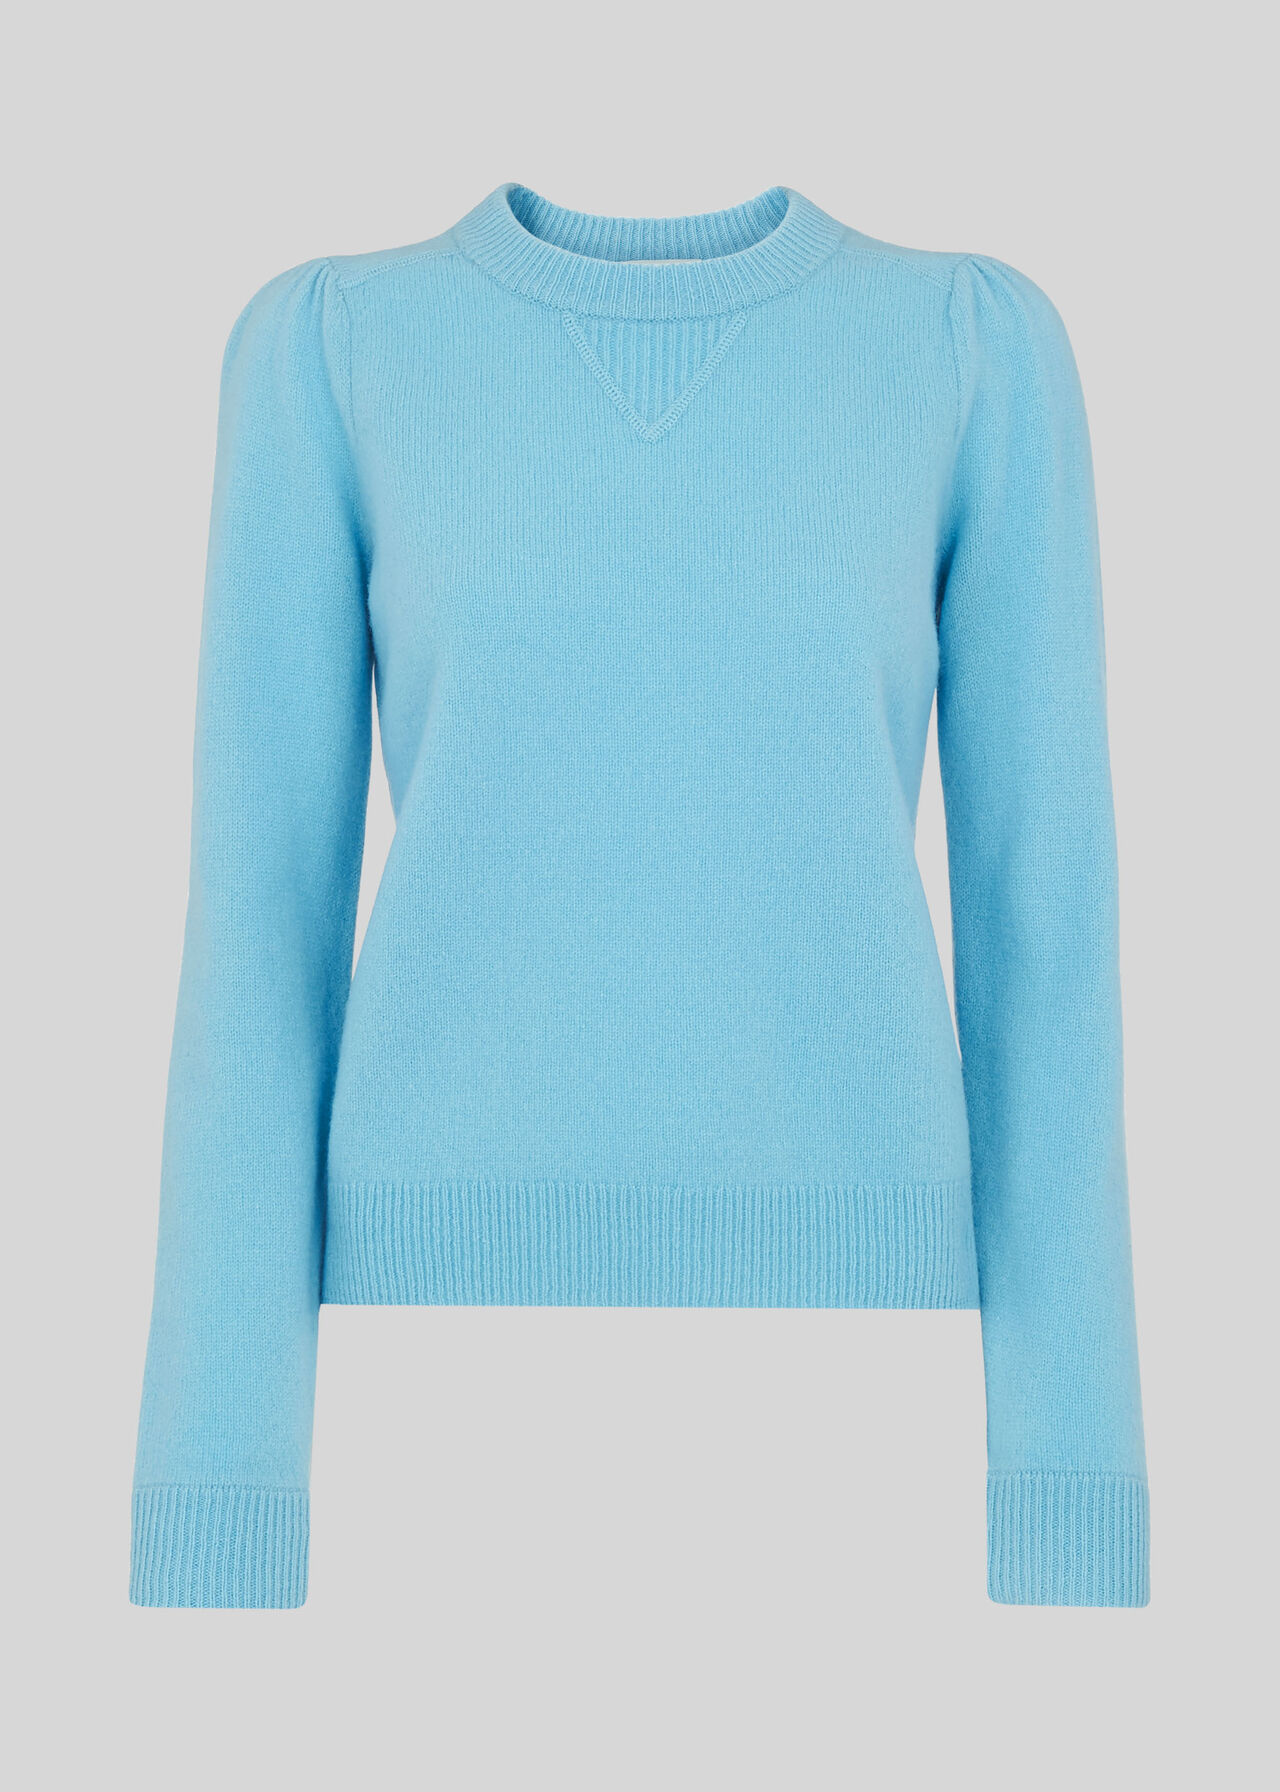 Pale Blue Puff Sleeve Merino Wool Knit | WHISTLES